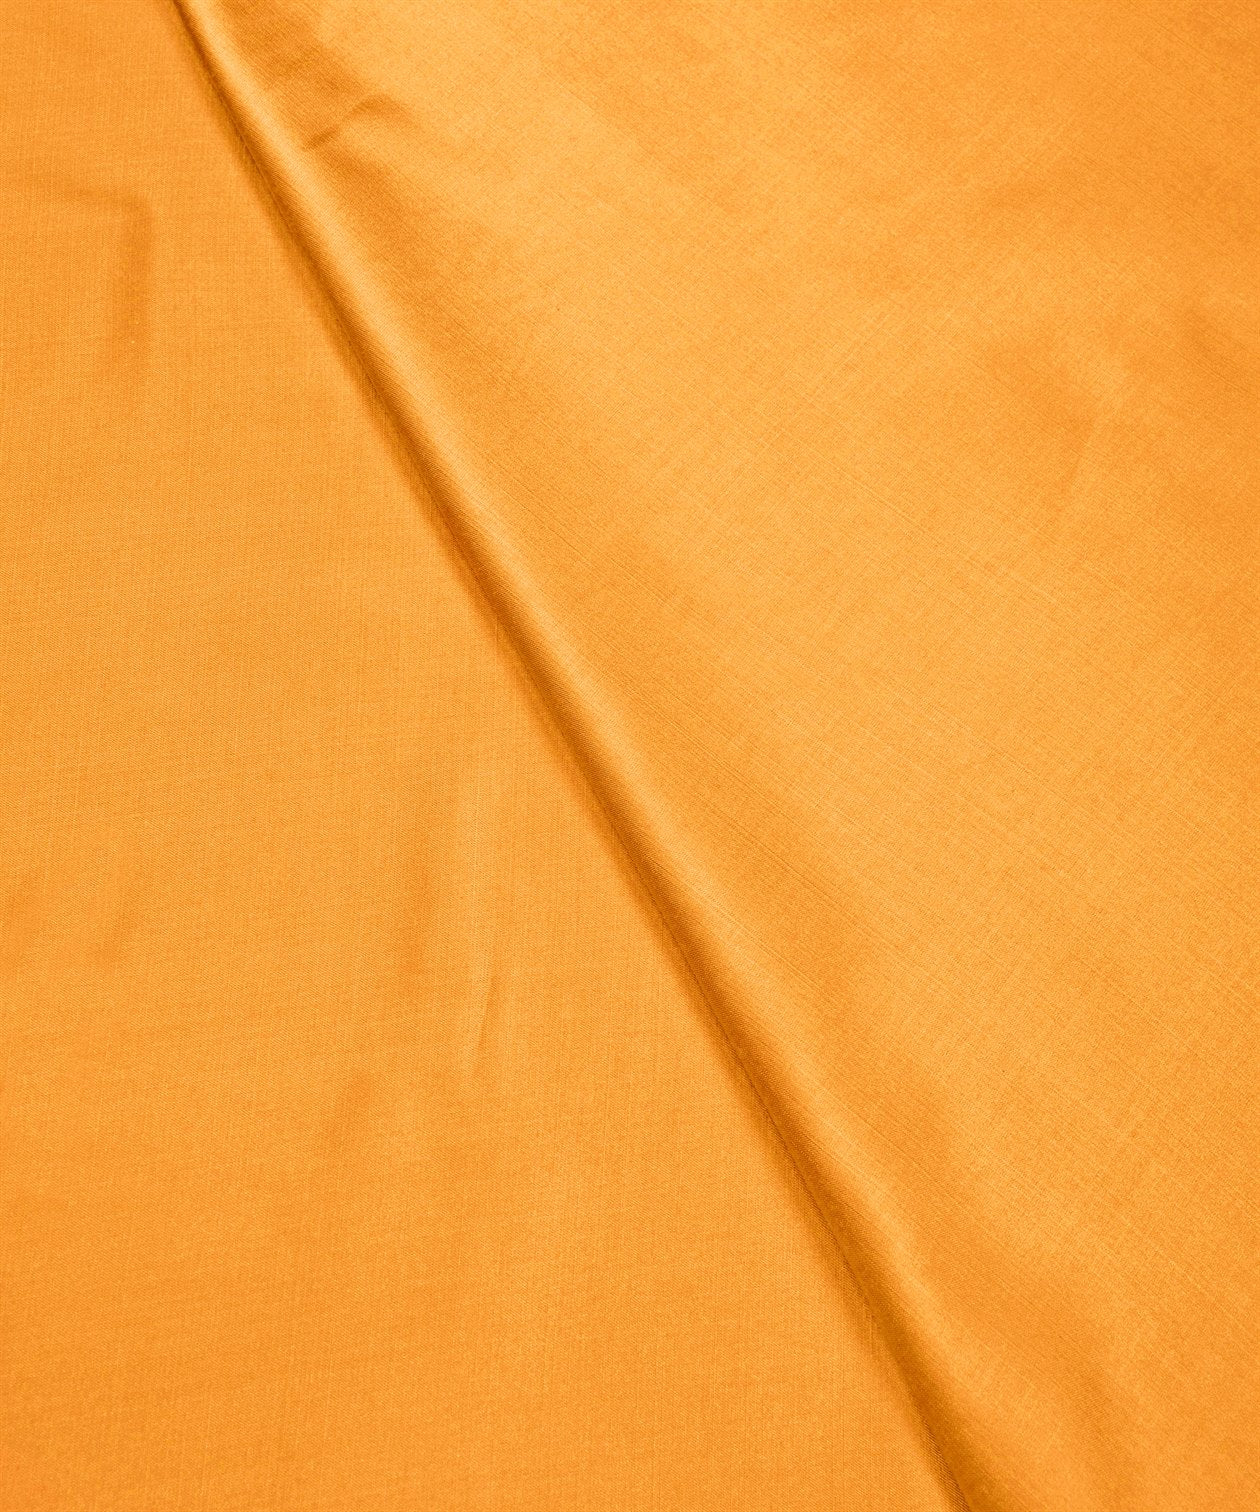 Gold Yellow Plain Dyed Modal Satin Fabric